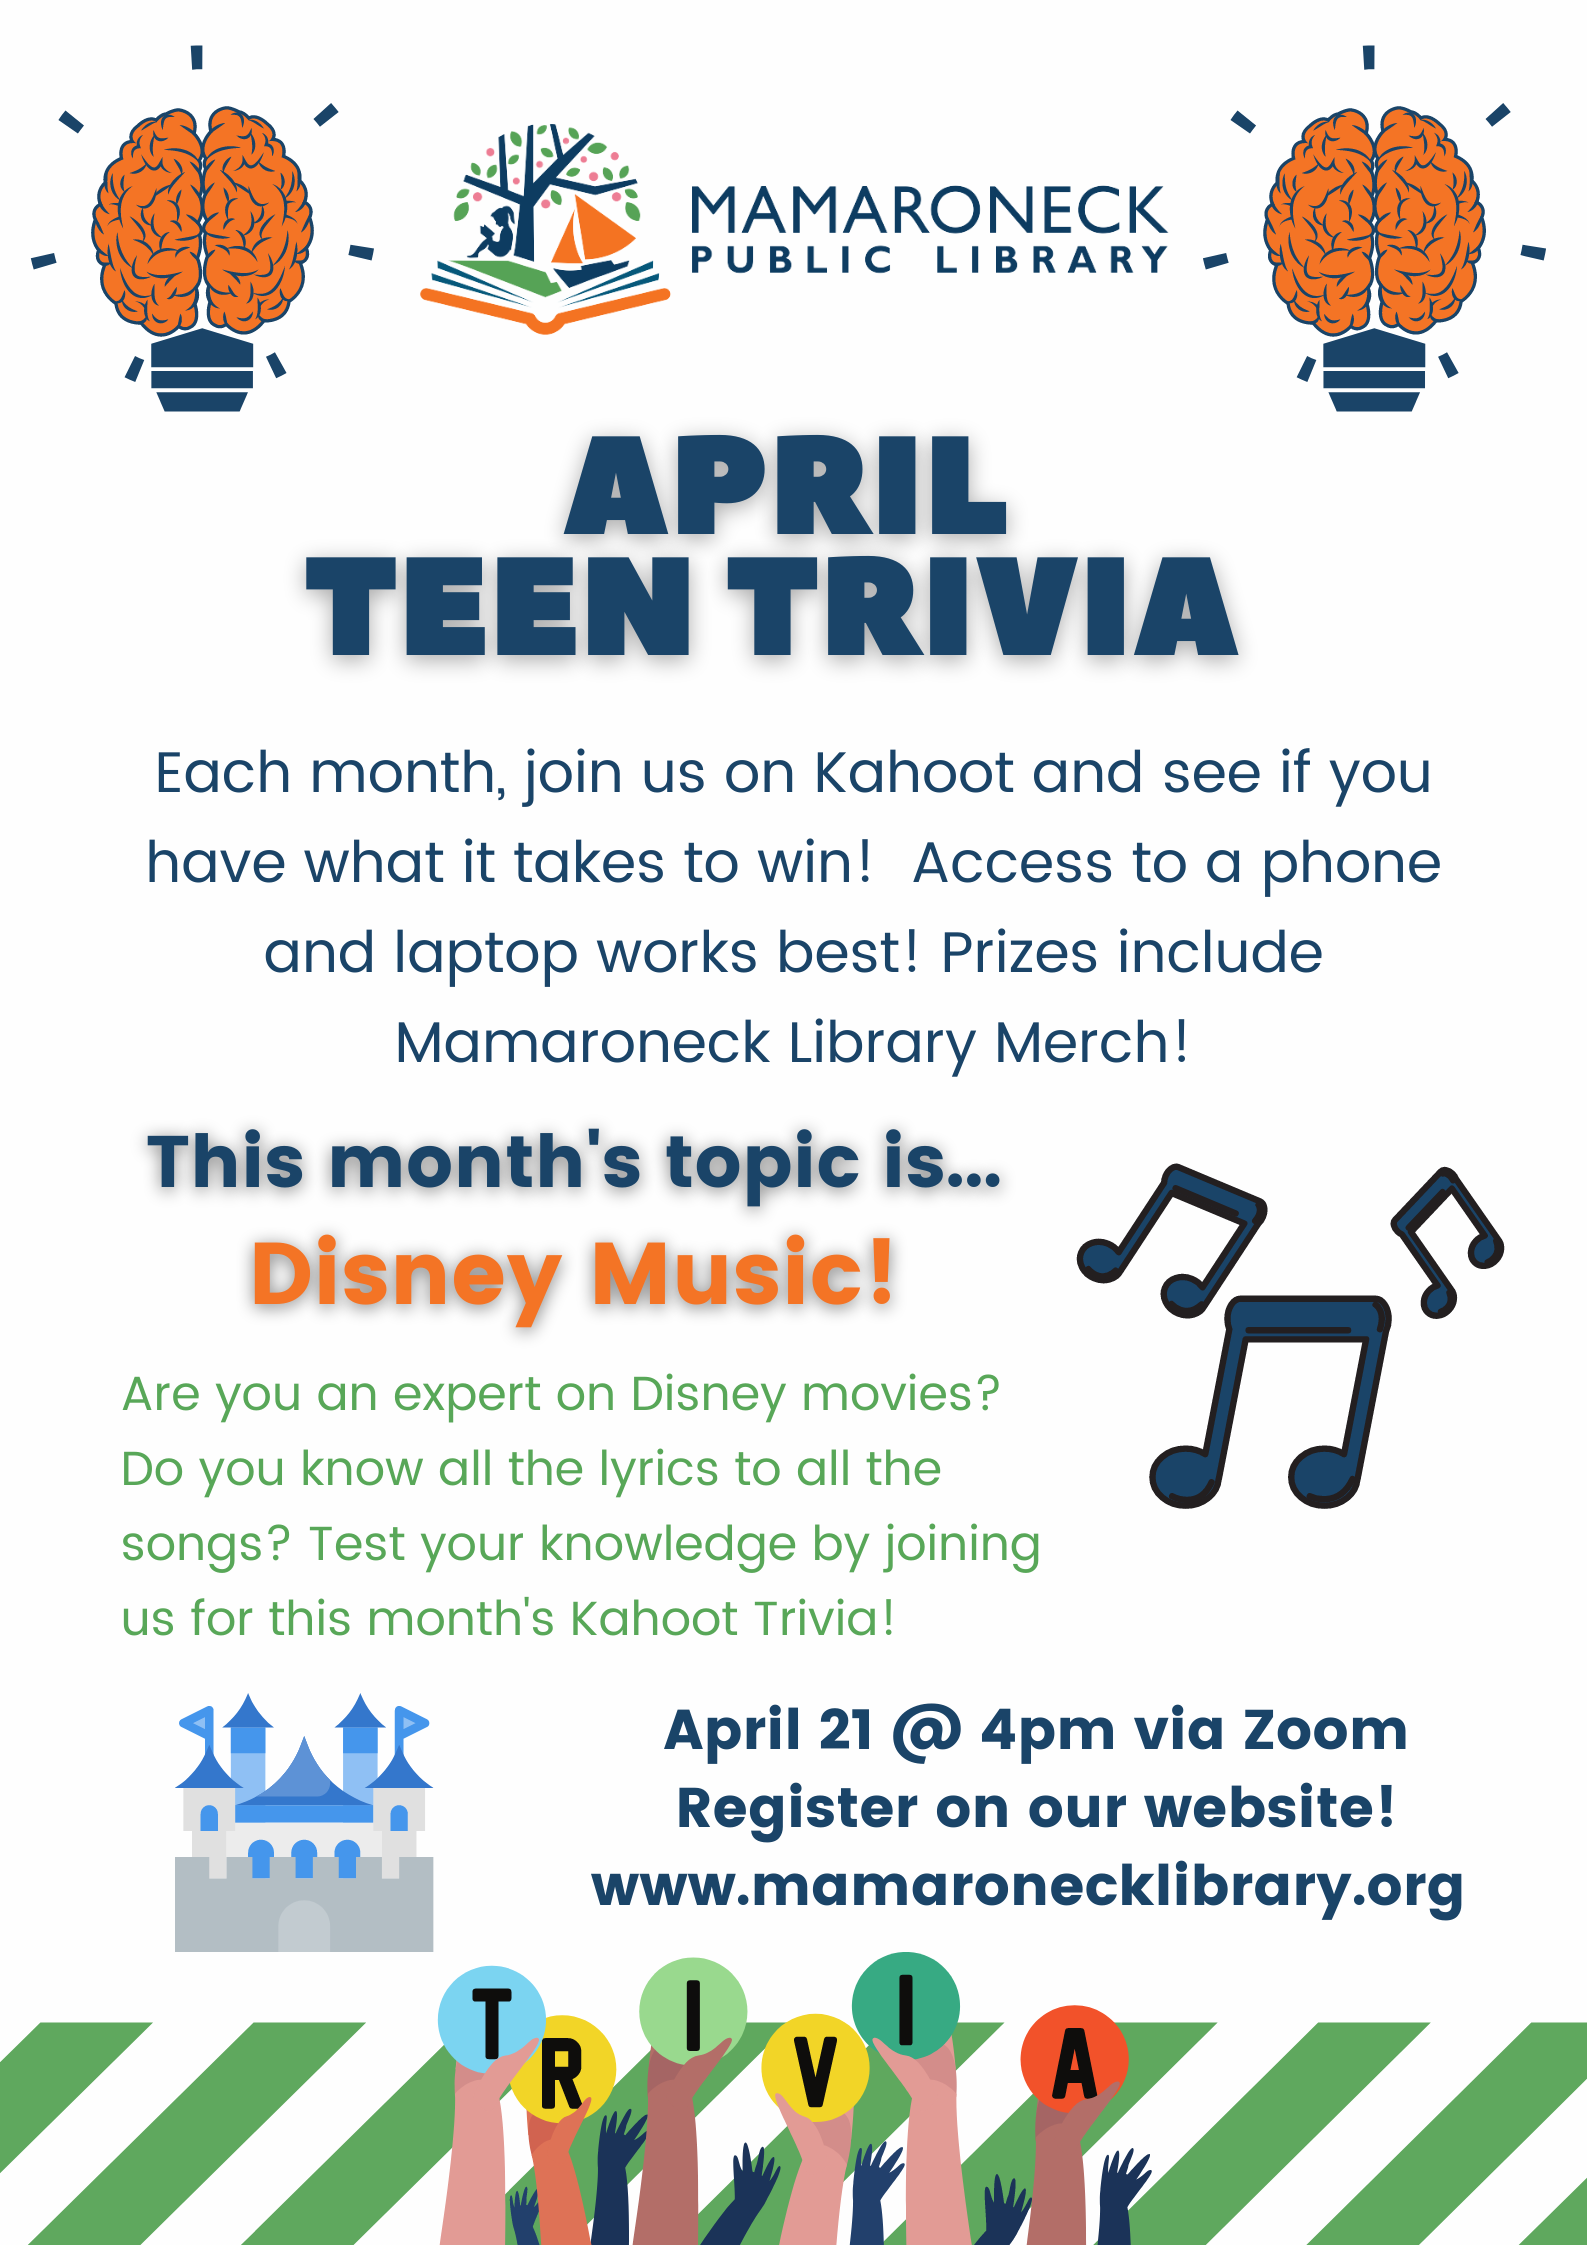 April Teen Trivia - Disney Music